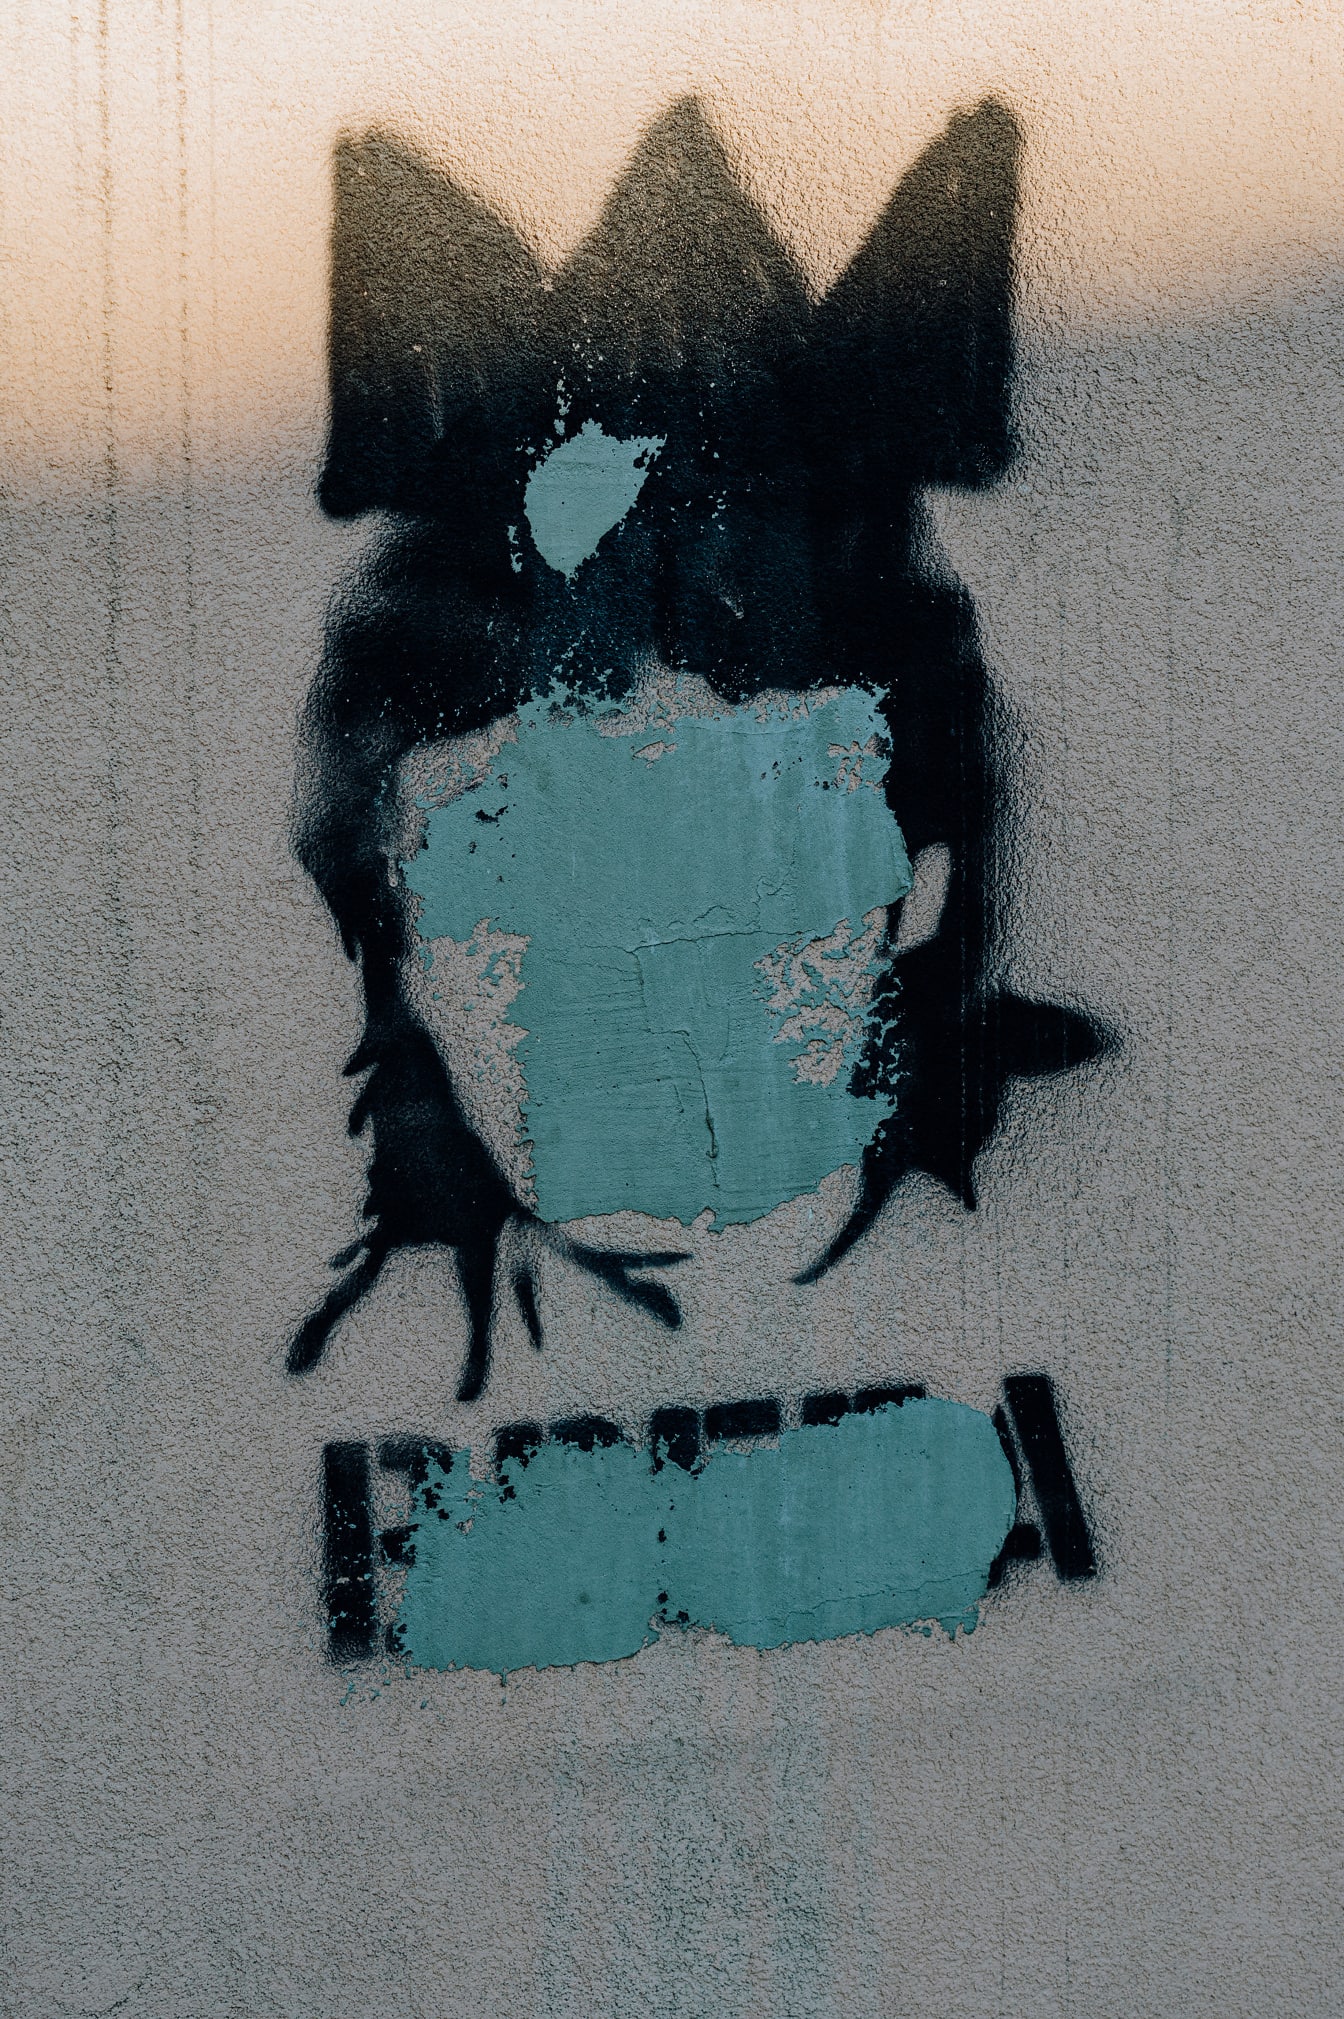 Graffiti de cabeza negra con cara pintada vandalismo urbano